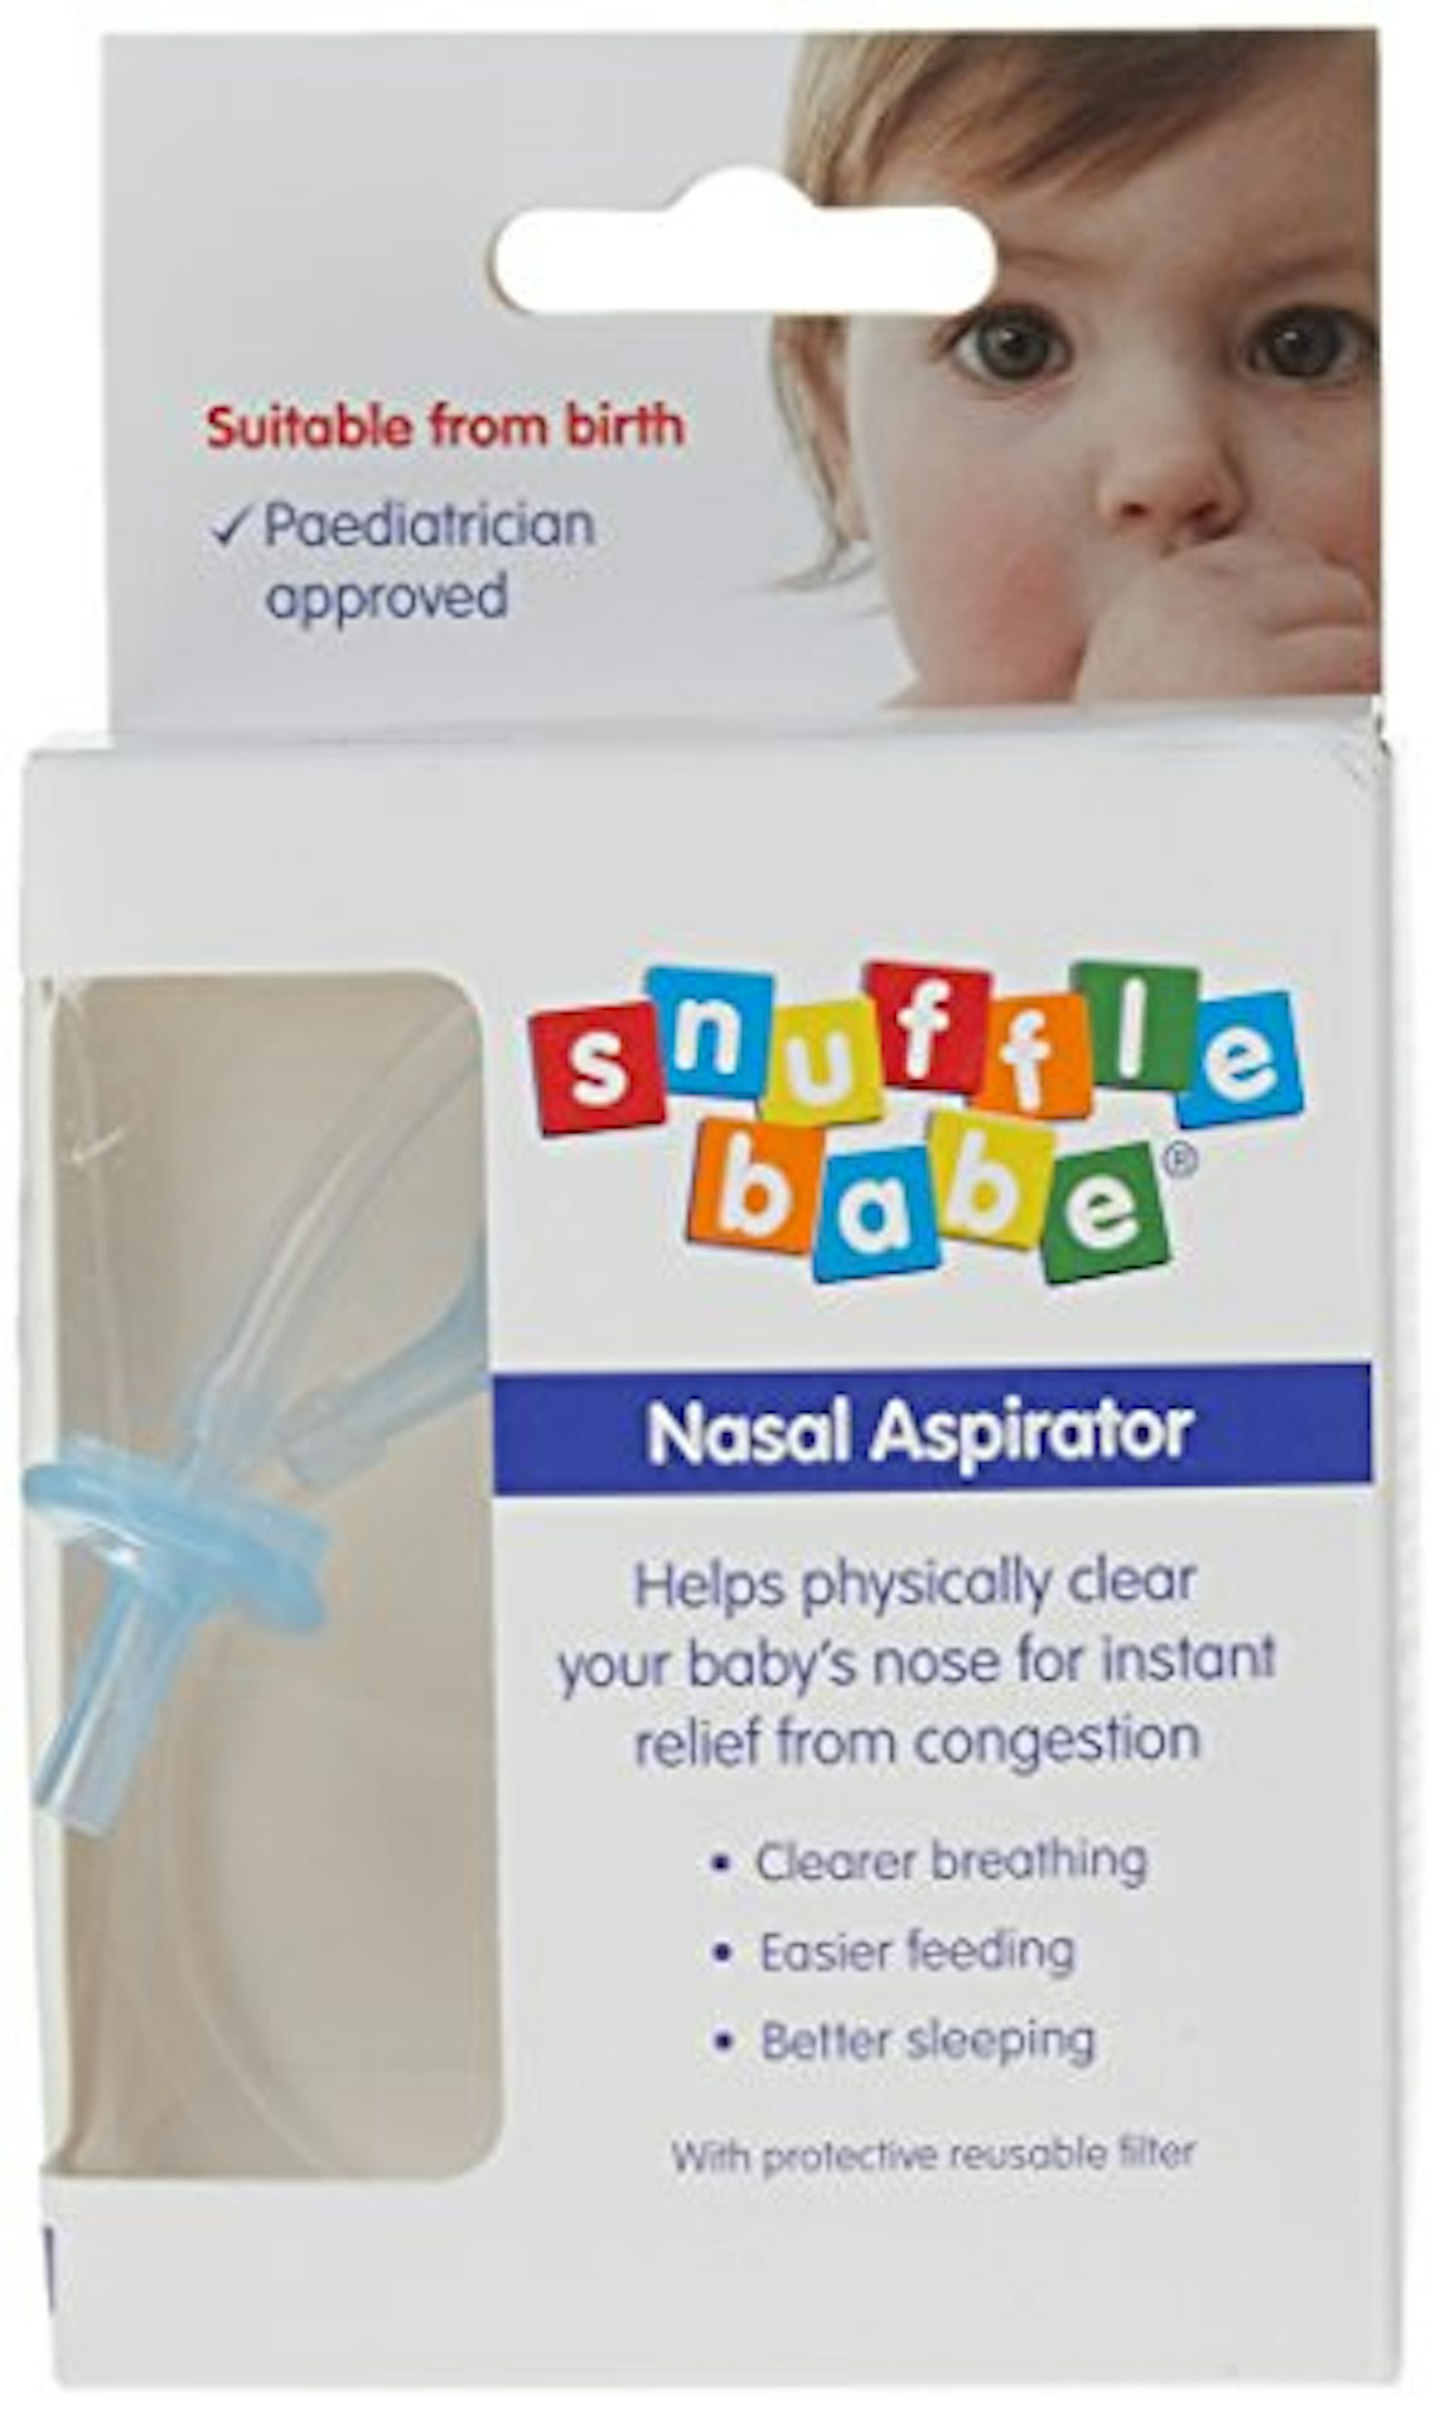 Snufflebabe Nasal Aspirator